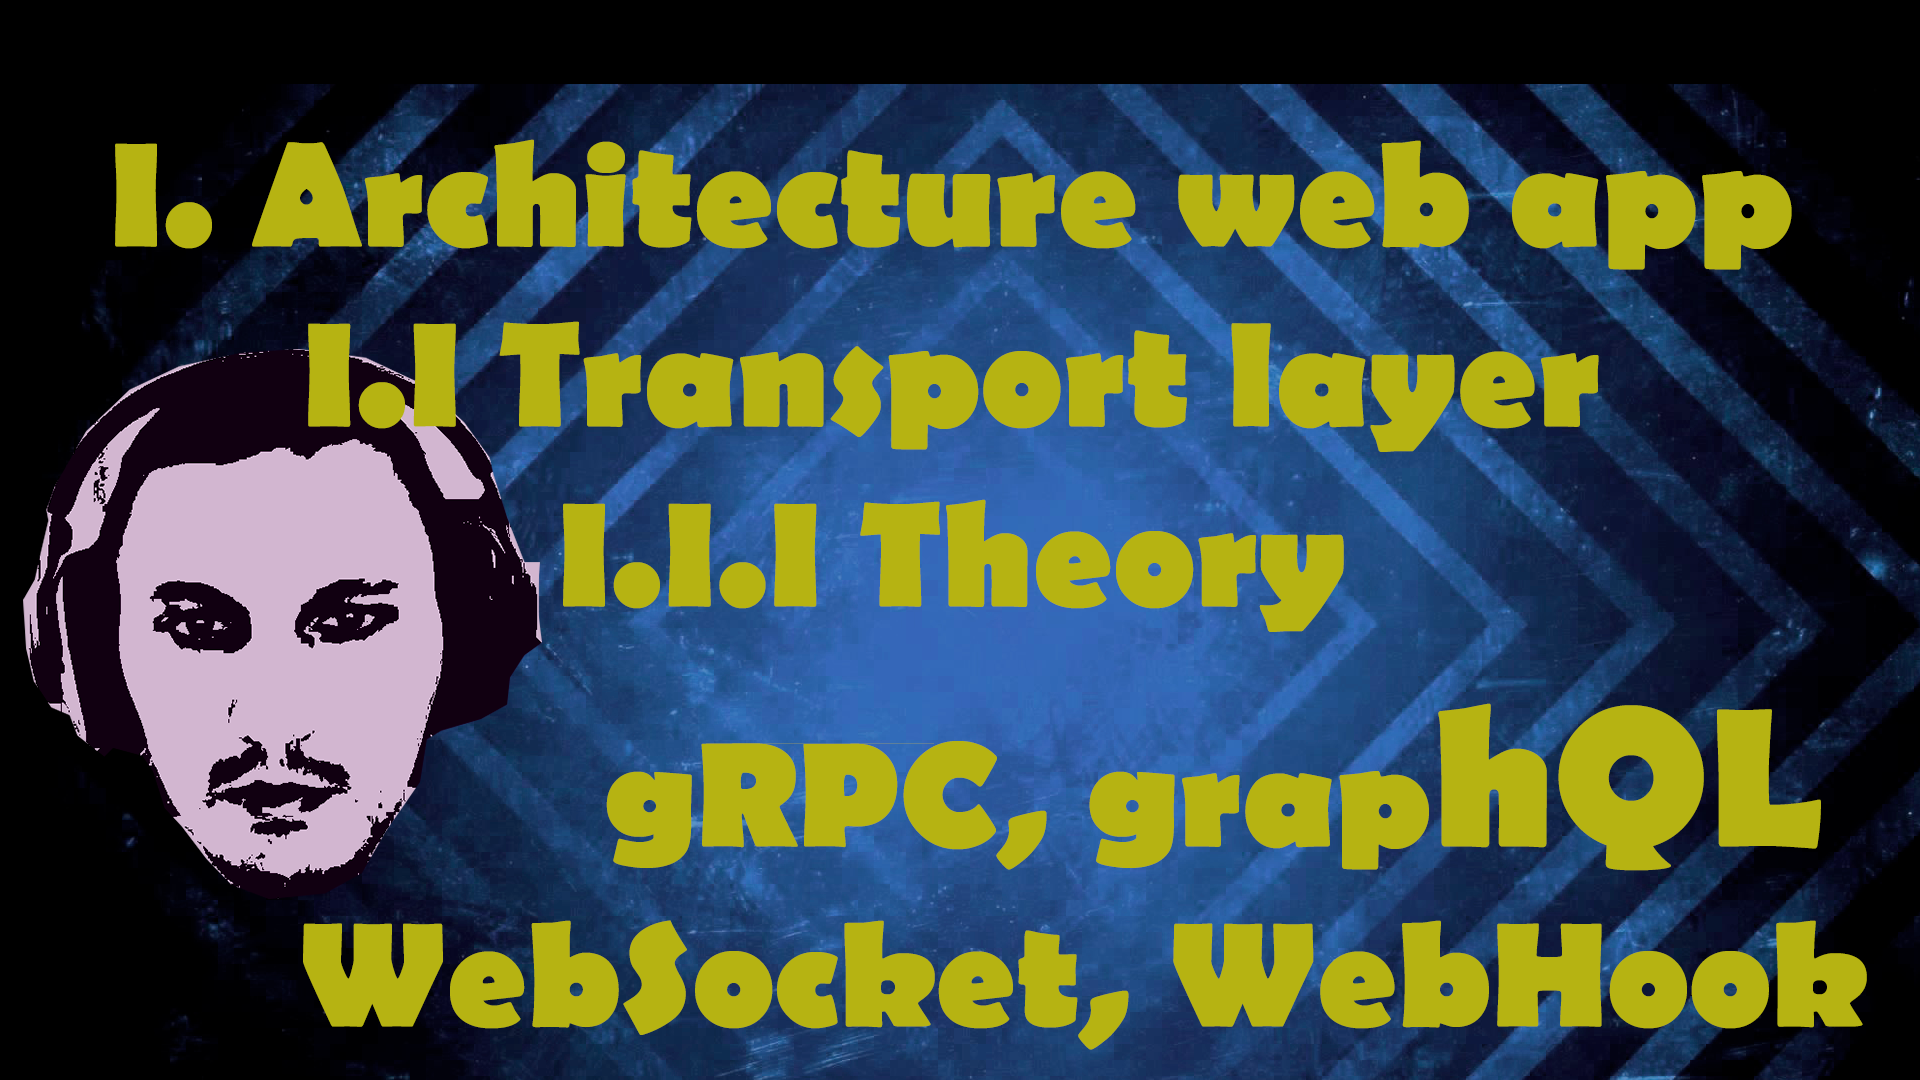 I. Architecture web app I.I Transport layer I.I.I Theory - WebSocket, WebHook, gRPC, graphQL